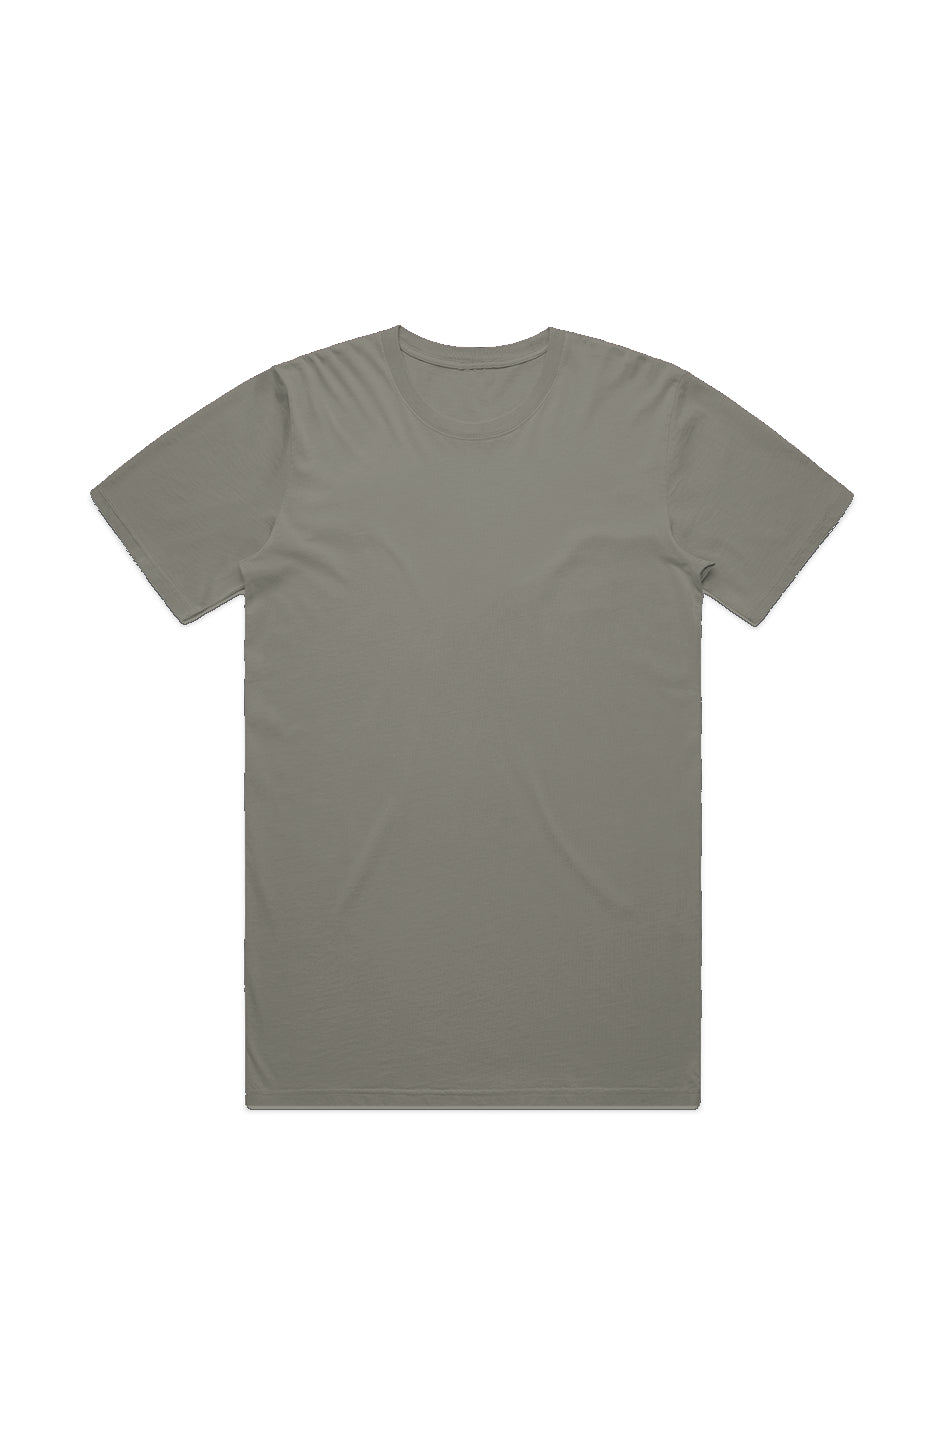 Men's Premium Faded Dust T-shirt - Men's T-Shirts - Apliiq - Men's Premium Faded Dust T-shirt - APQ-4662478S6A0 - s - Faded Dust - Dragon Foxx™ - Dragon Foxx™ Men's Premium Faded Dust T-shirt - DRAGON FOXX™ Men's Premium Faded Dust Trailblazer Tee